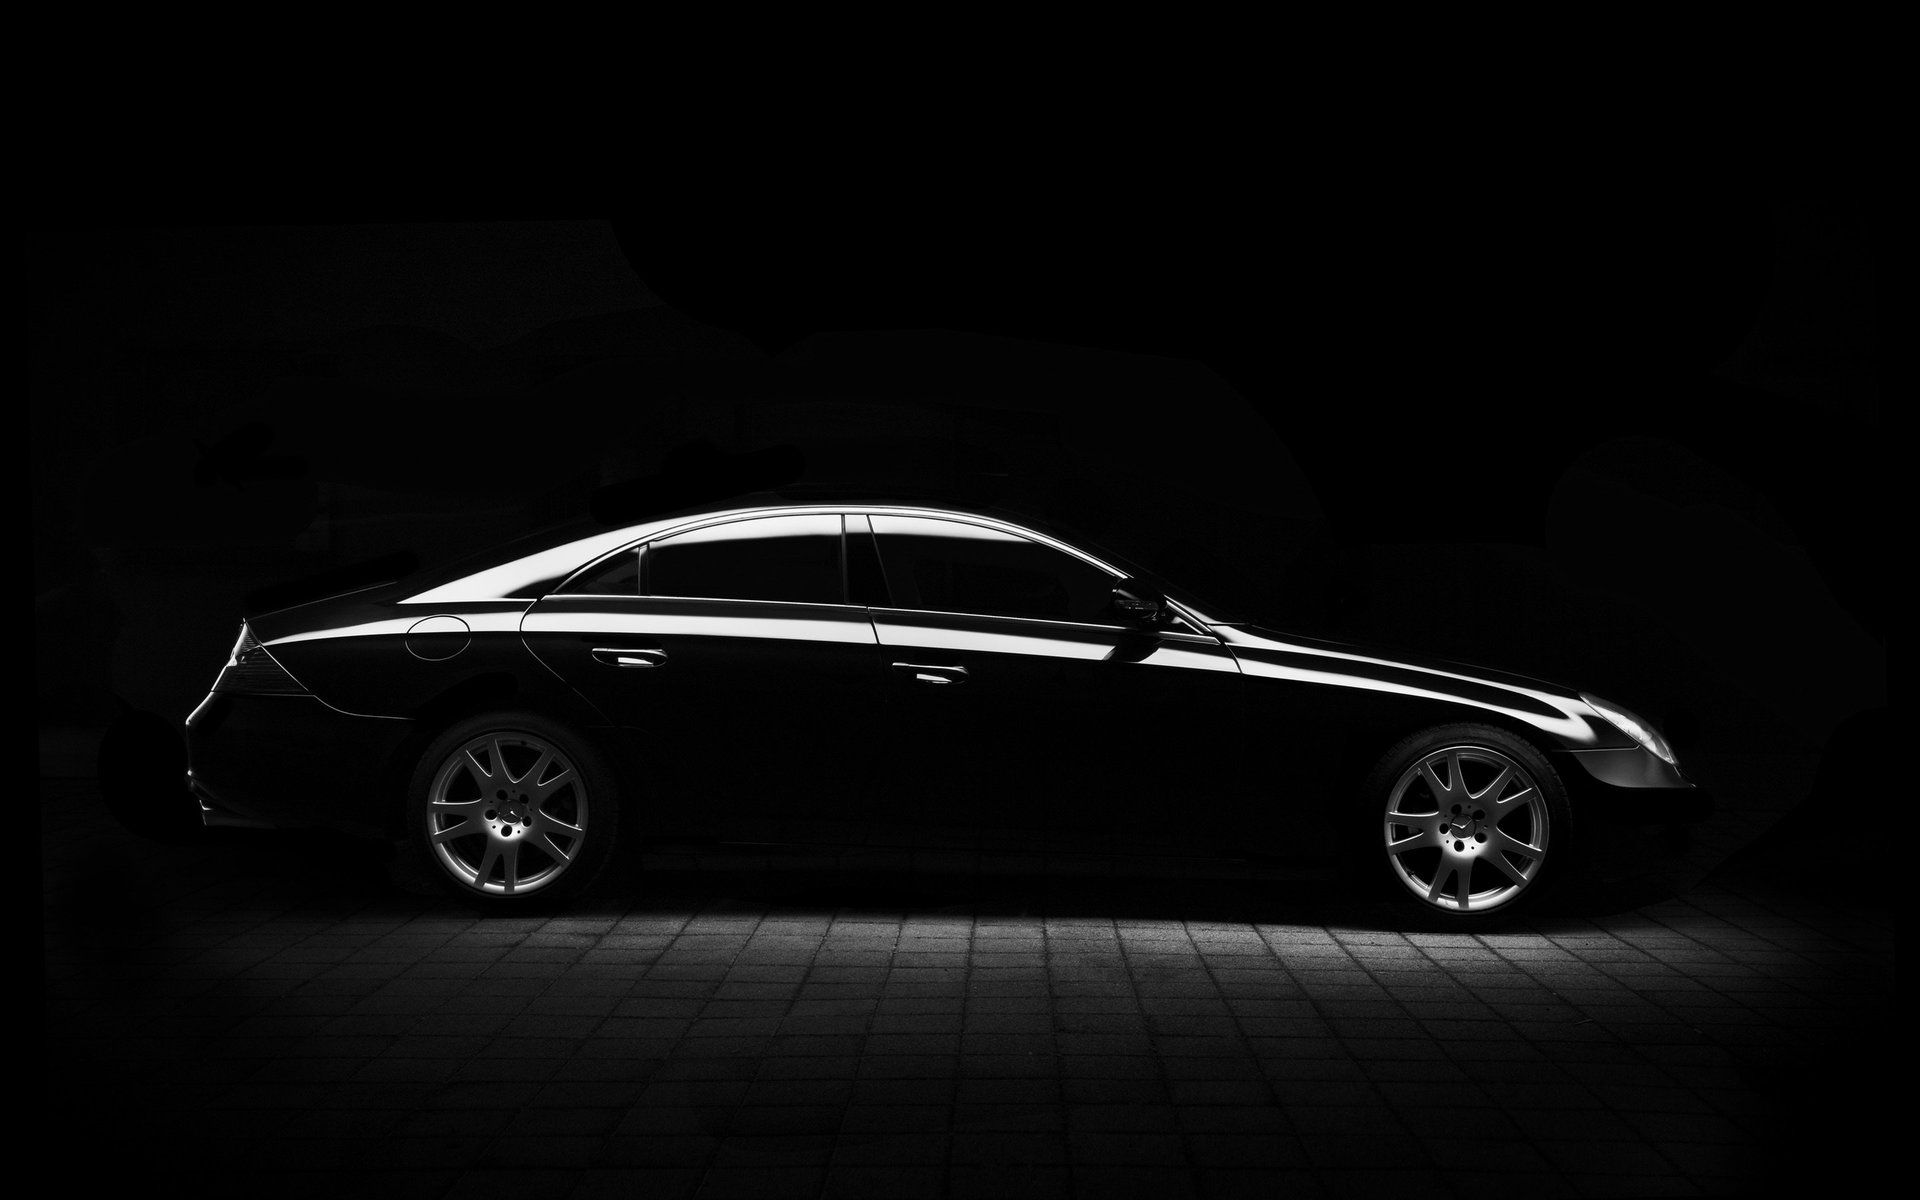 a black car in dem lighting .